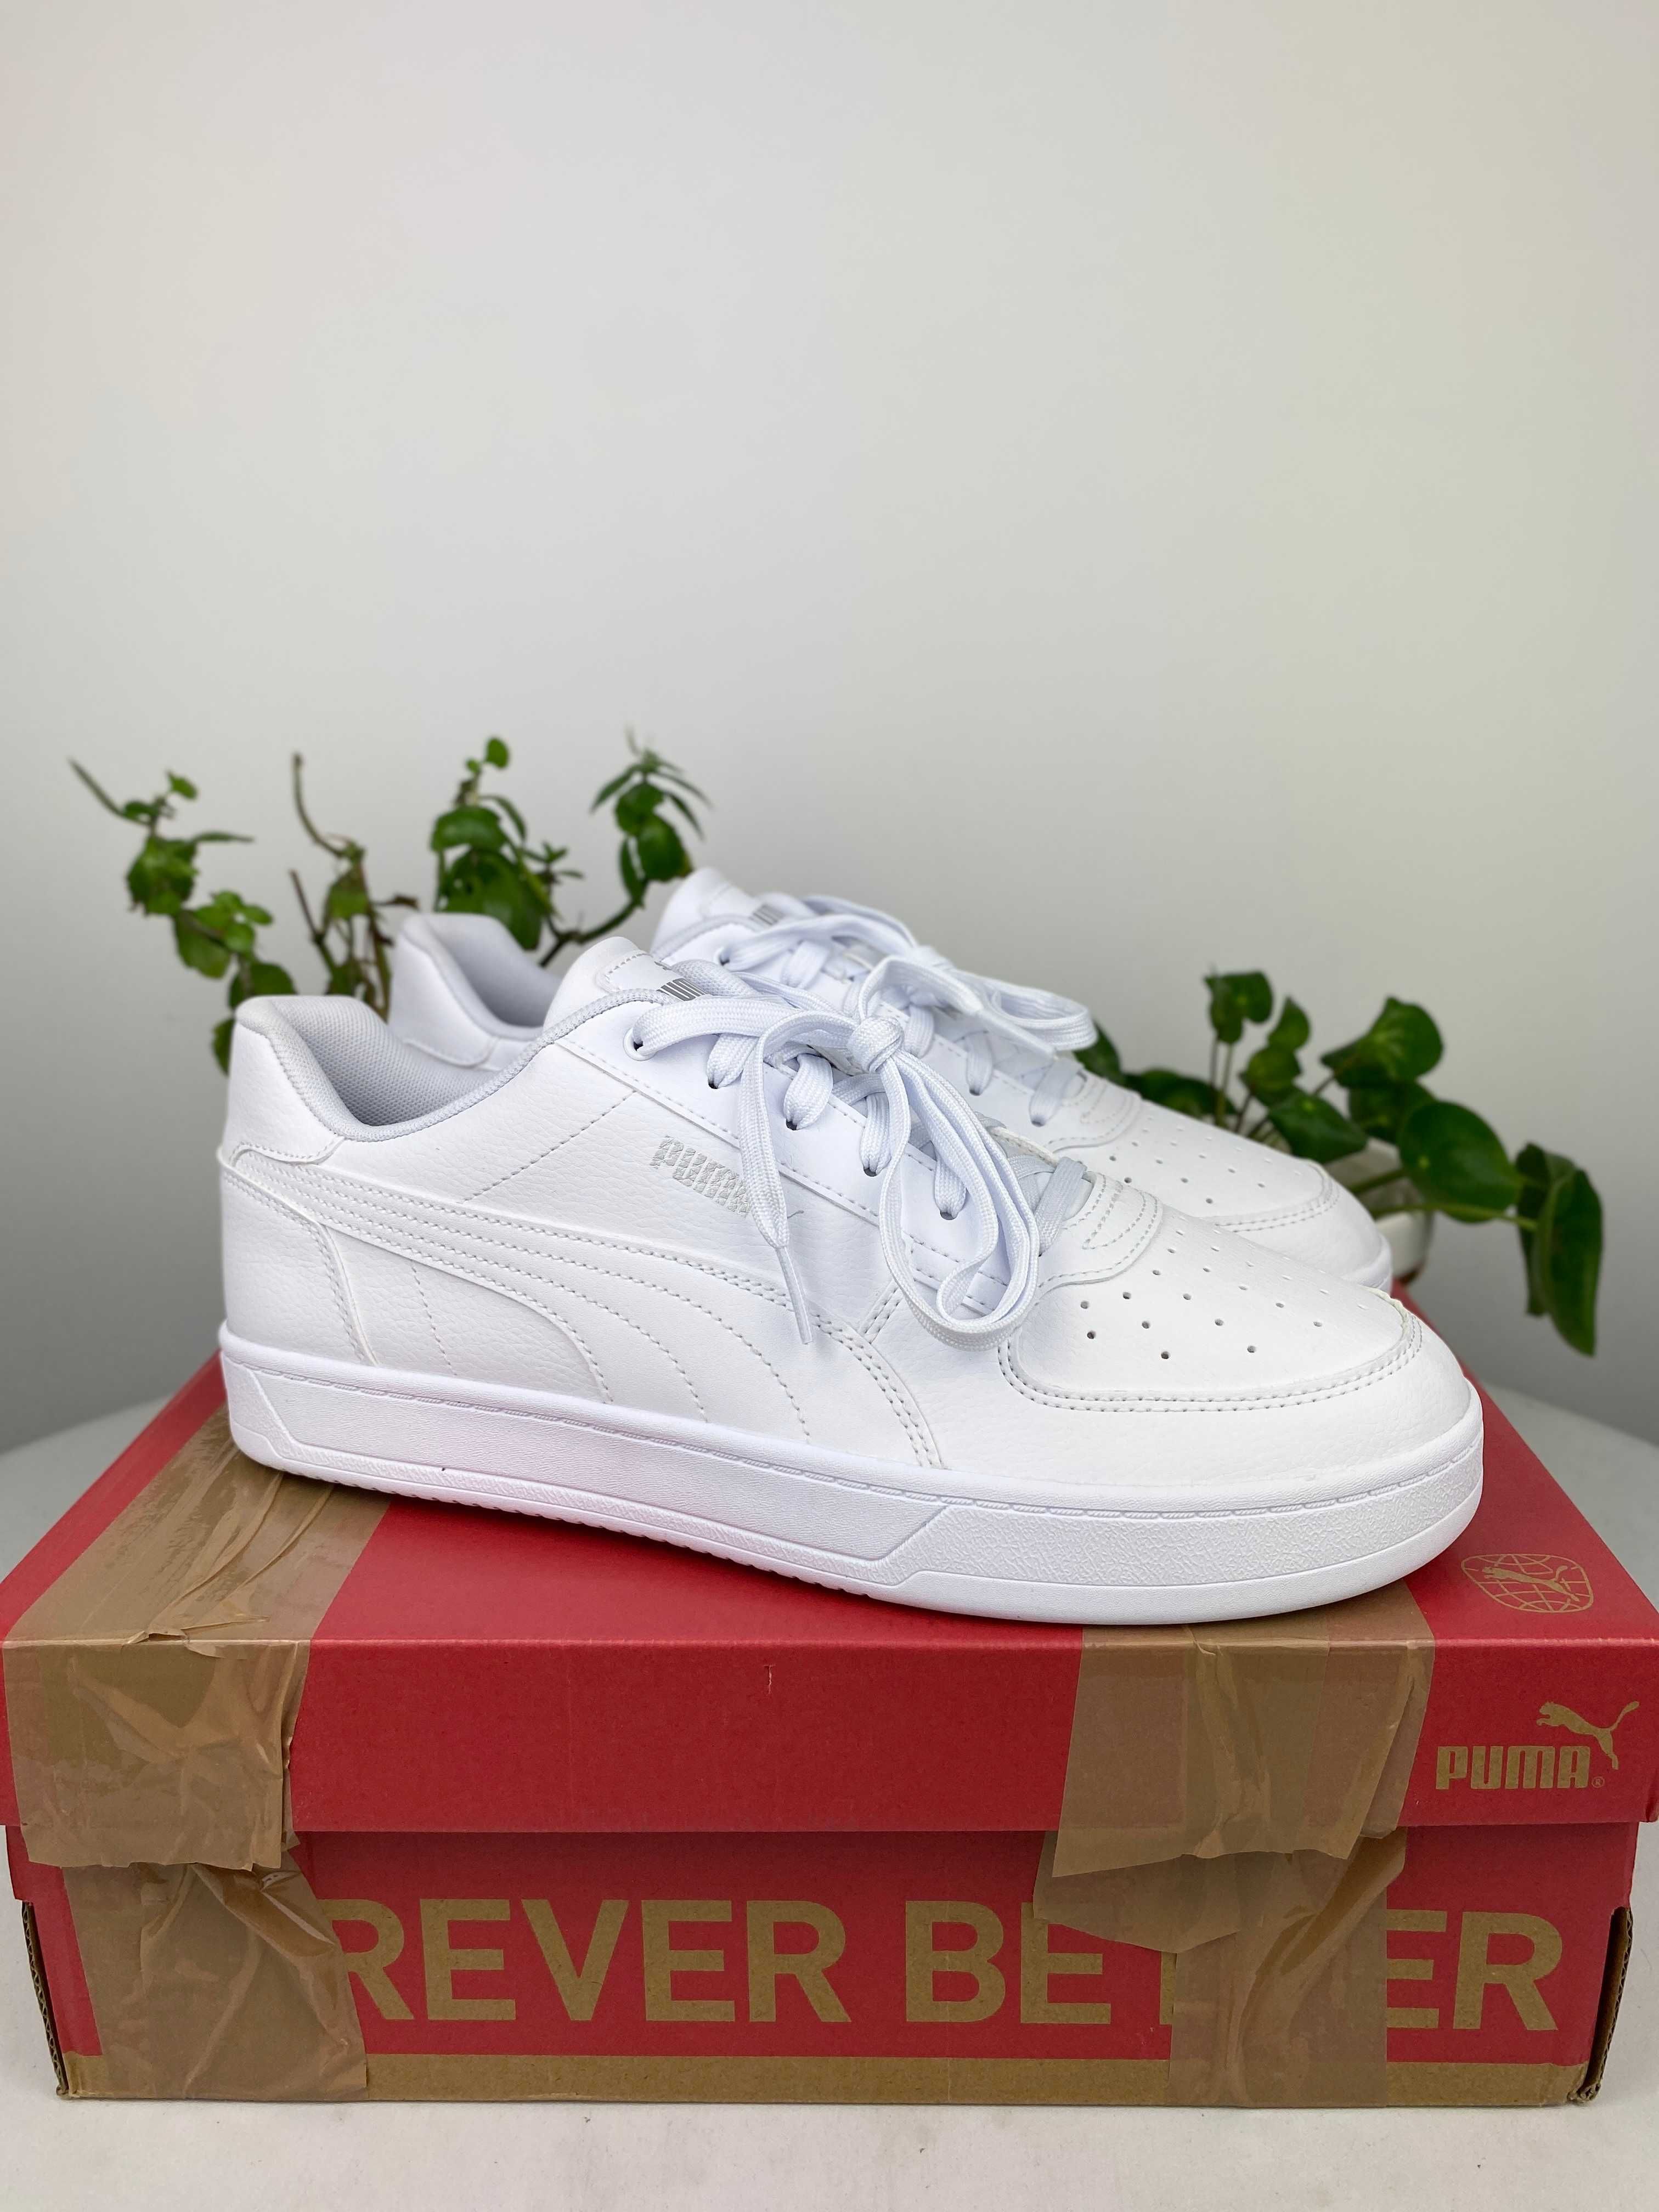 białe buty sneakersy puma Caven 2.0 r. 44,5 n220